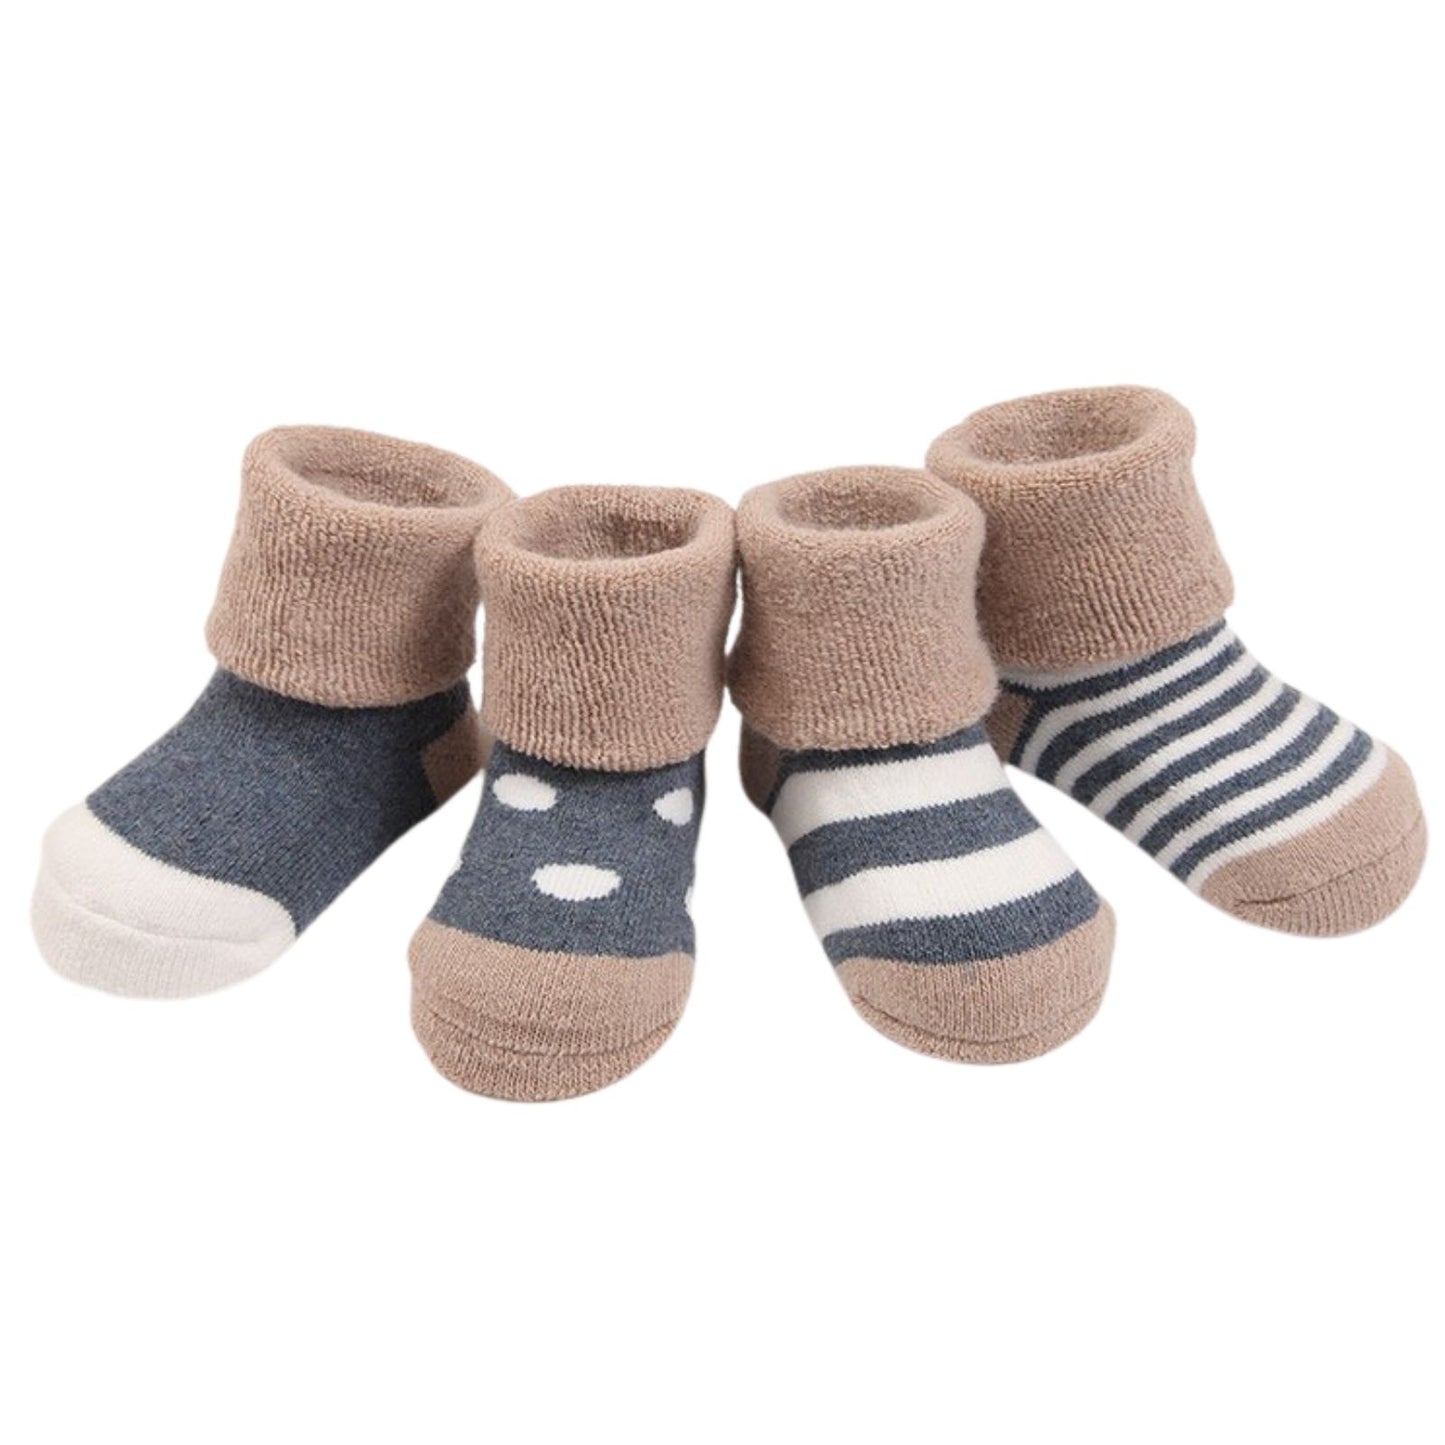 4 Pairs Kids Toddler Infant Cotton Socks